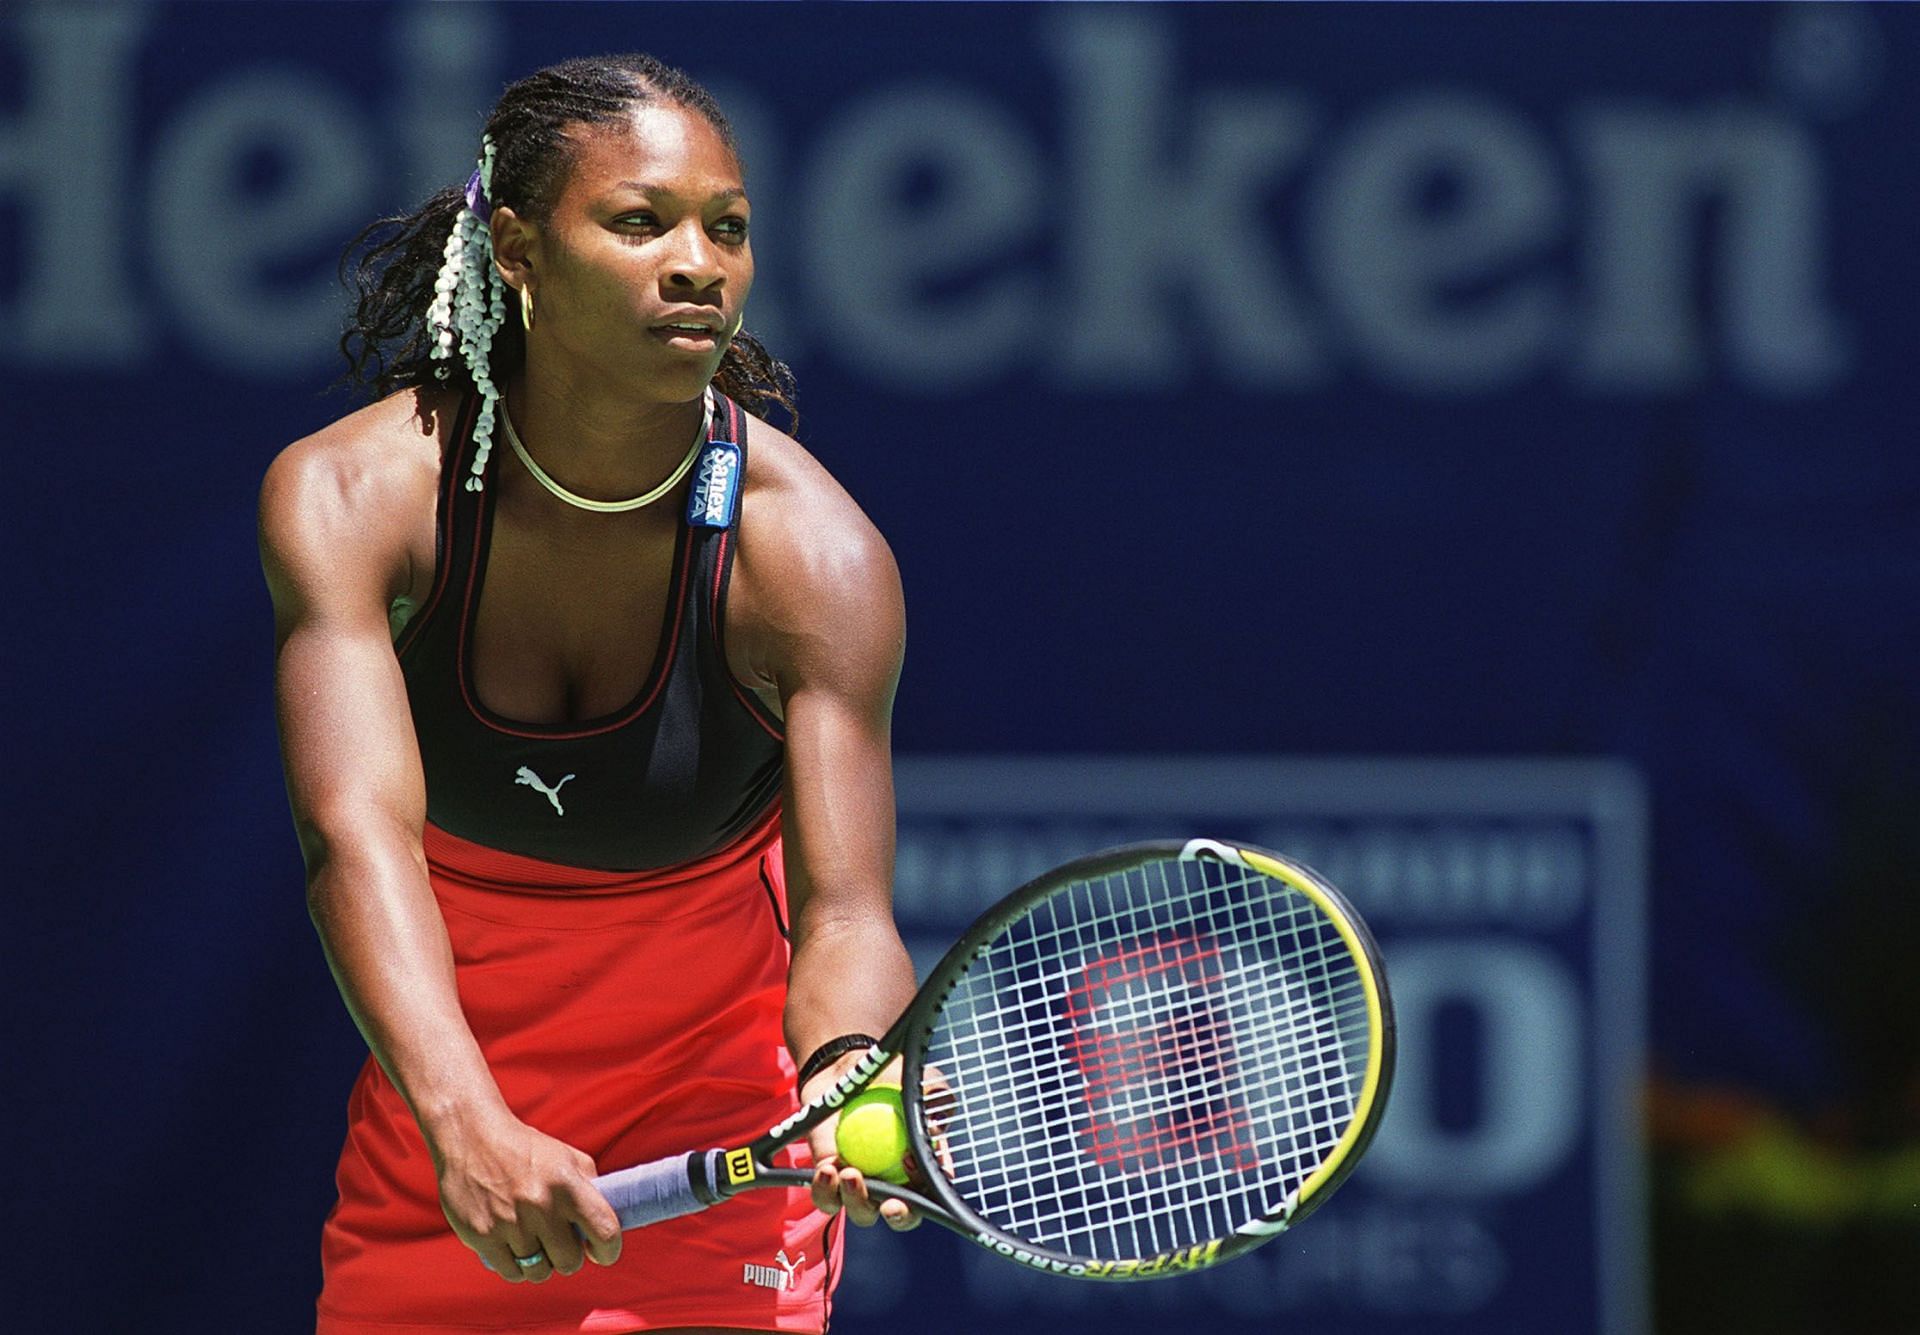 Serena Williams at the 2000 Australian Open.